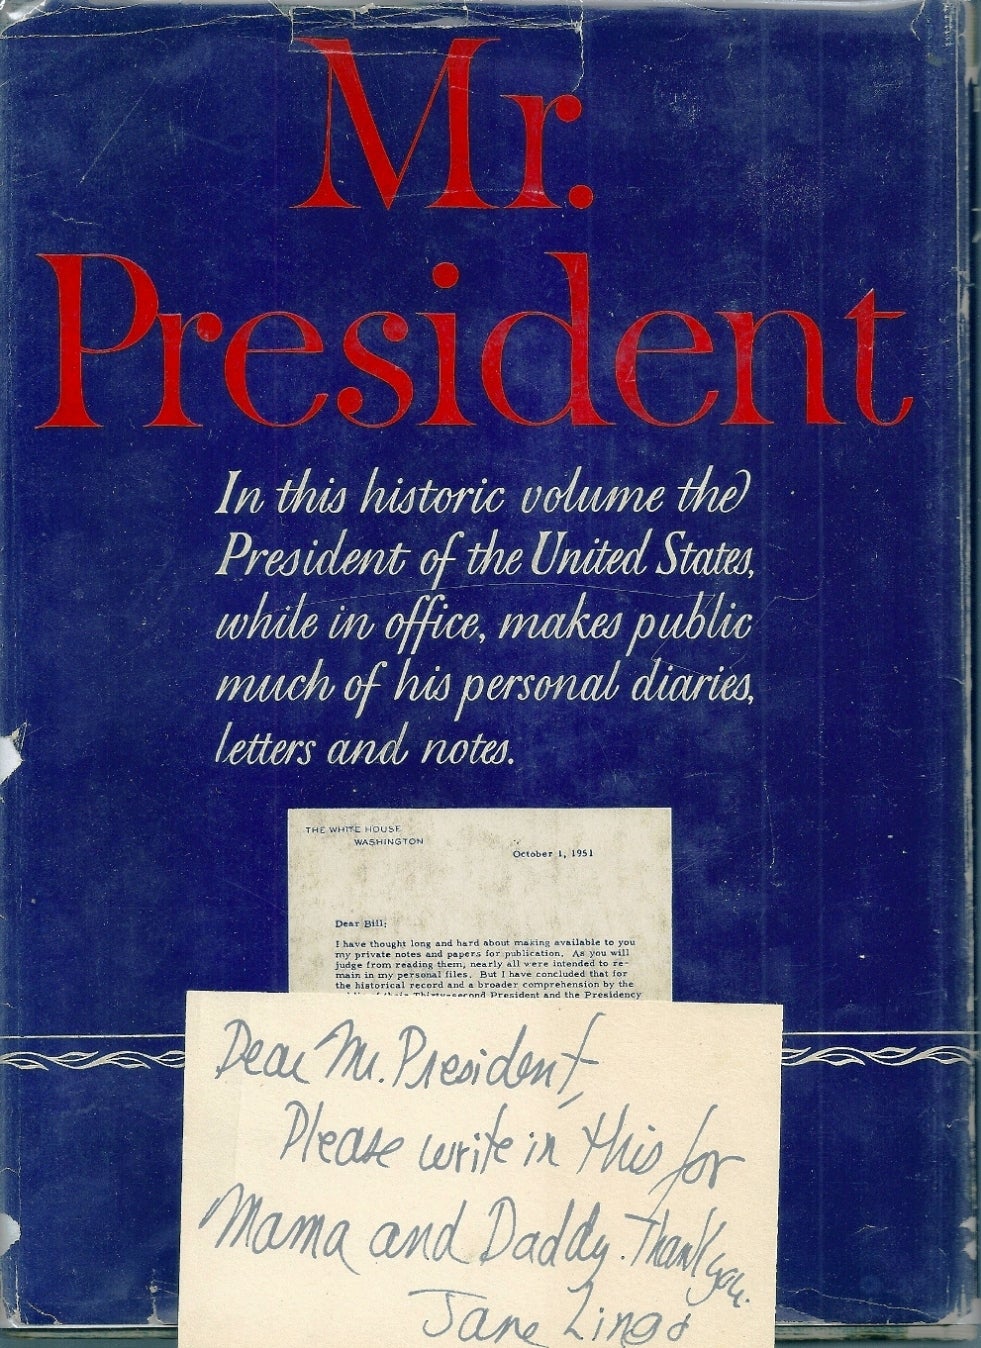 Harry Truman Autograph Book - The First Edition Rare Books